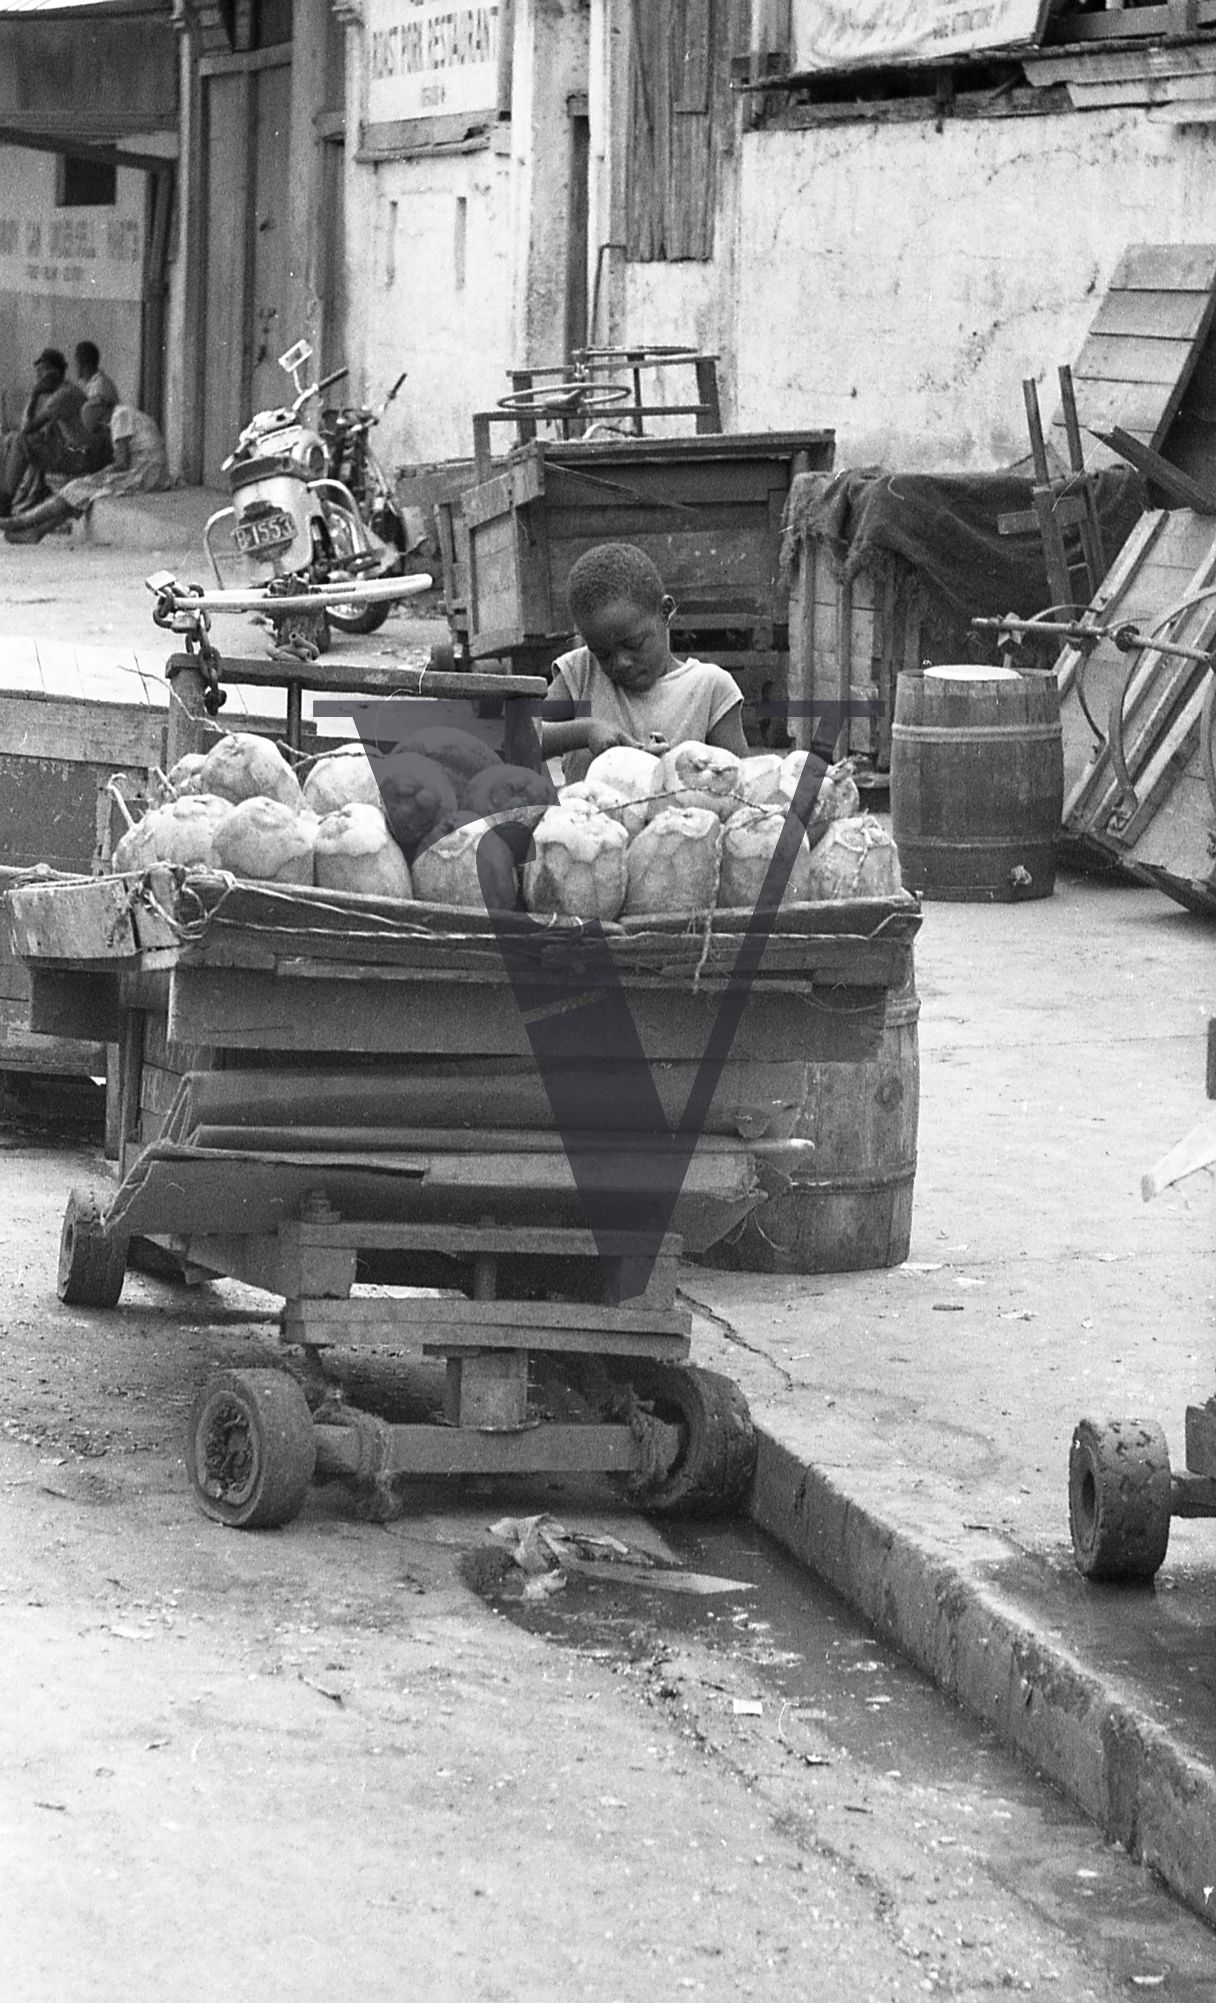 Jamaica, Boy attends to fruit cart on street.